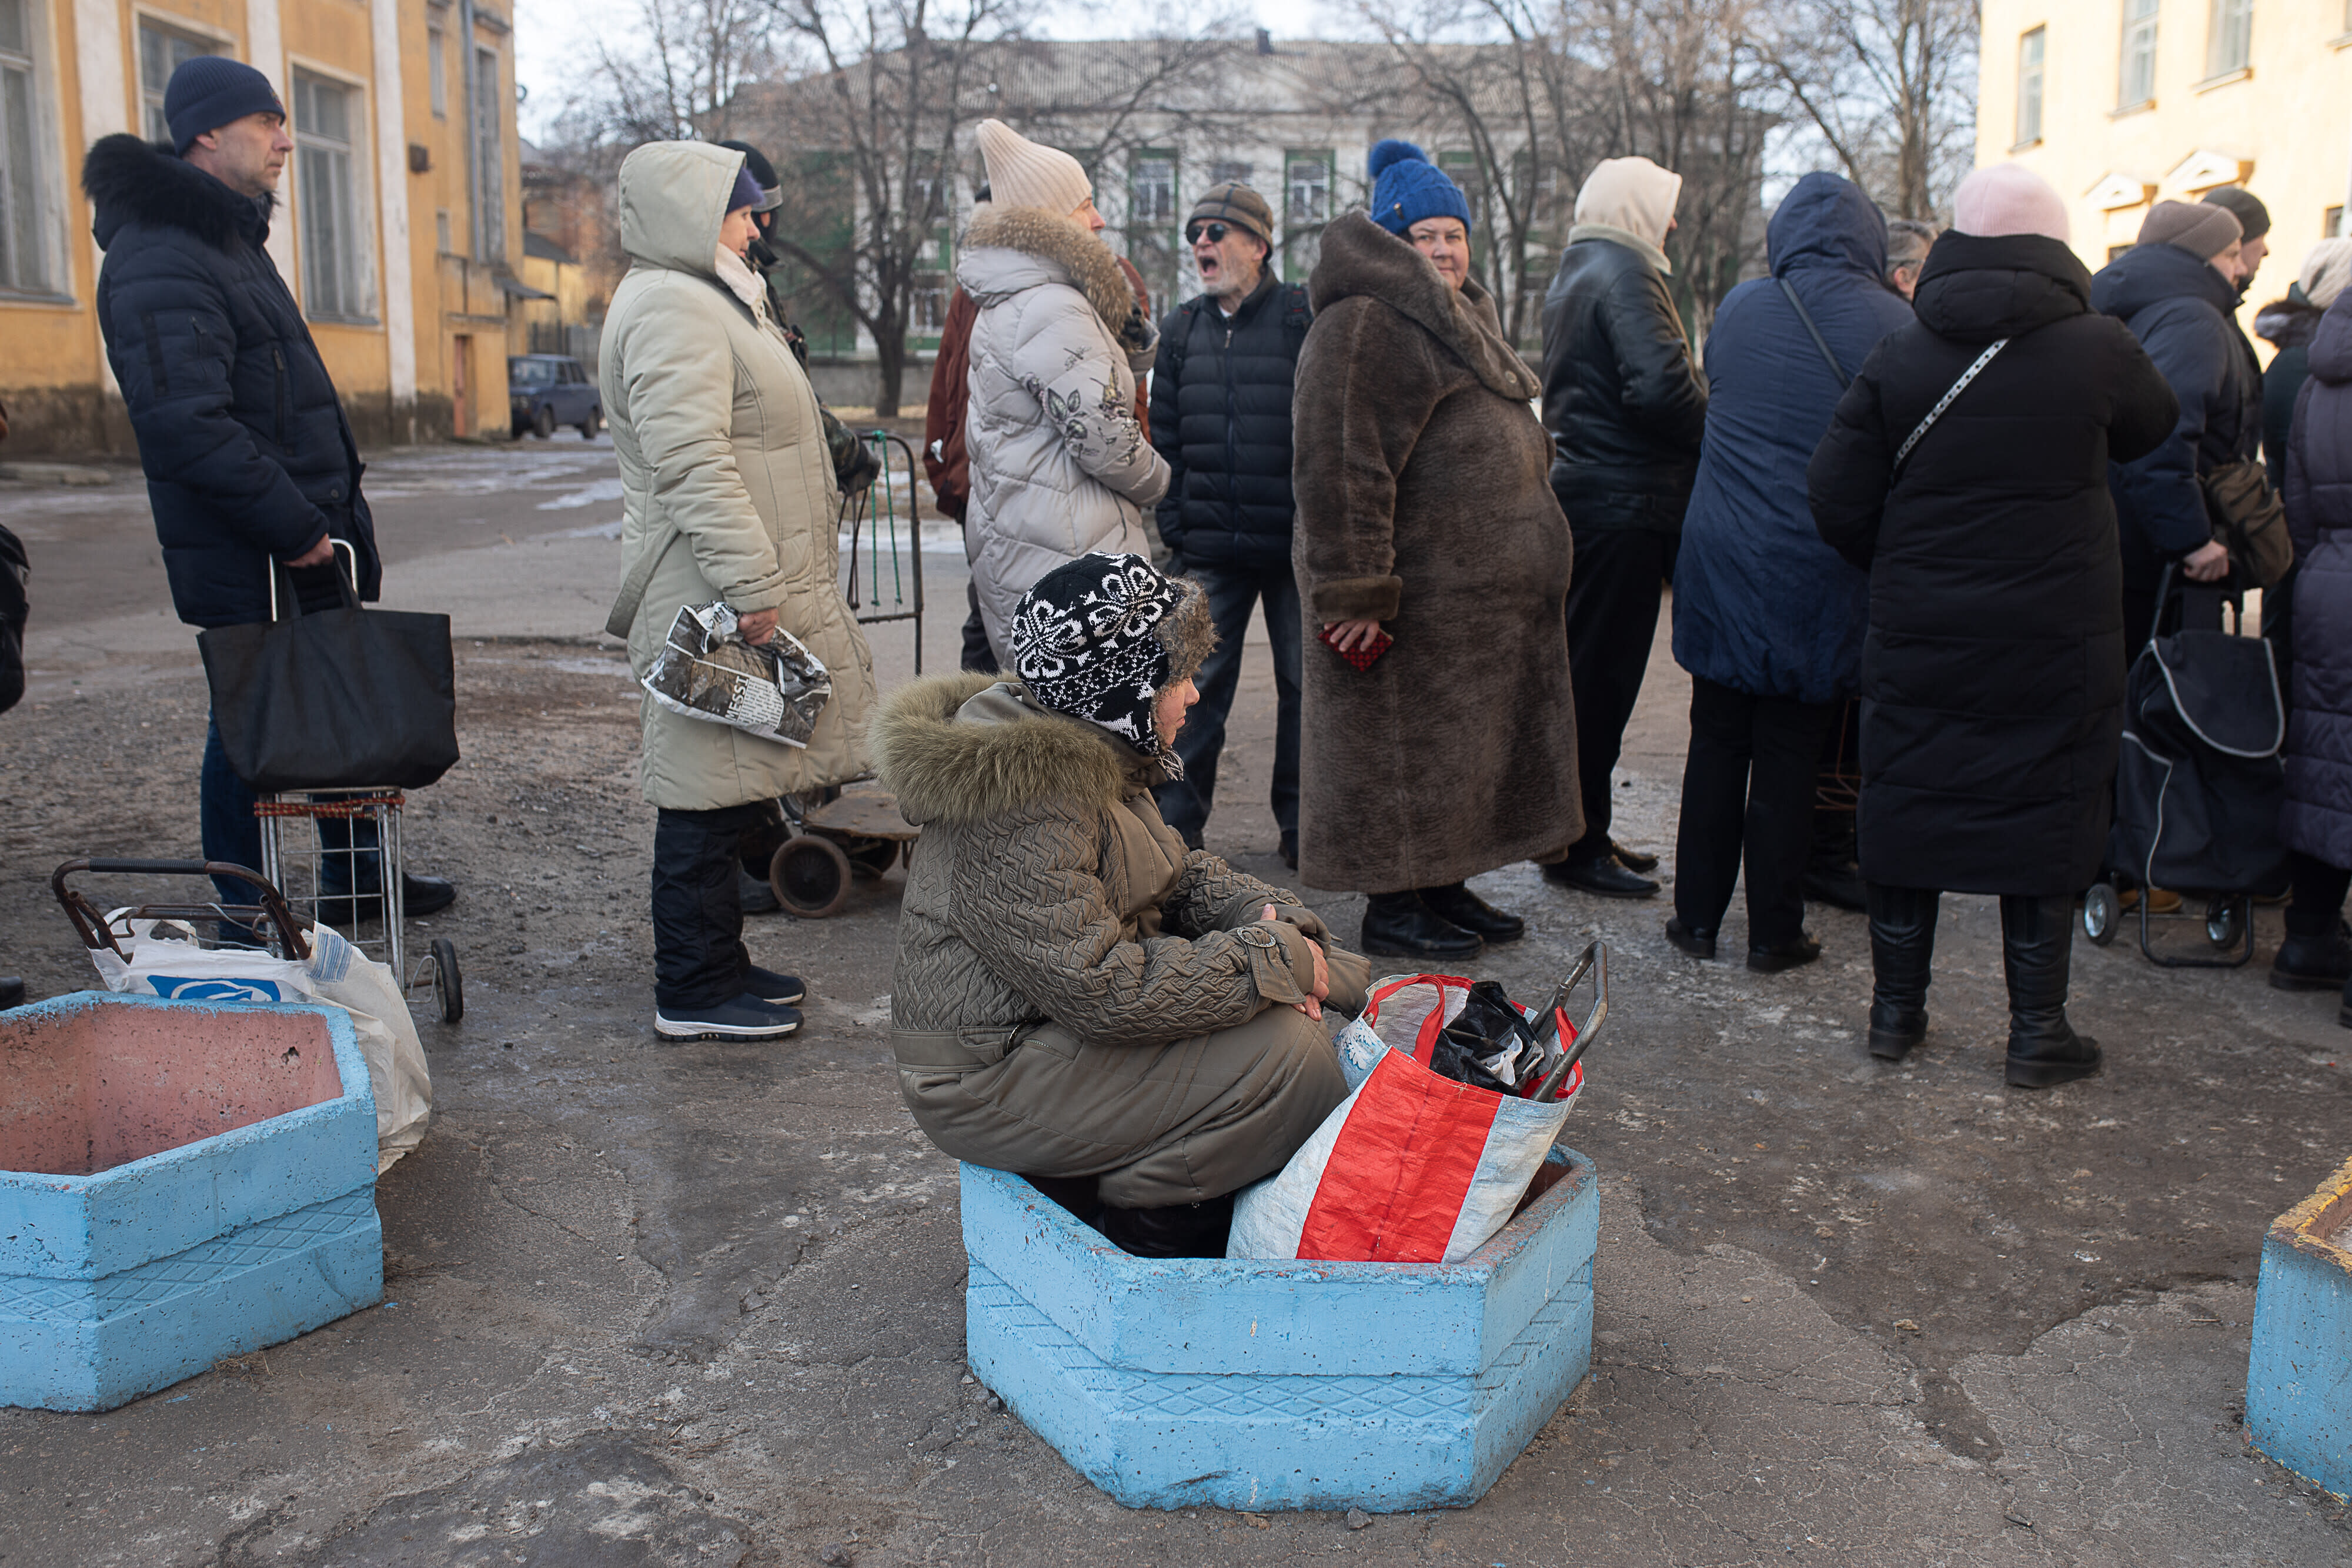 Finland is sending EUR 29 million in humanitarian aid to Ukraine